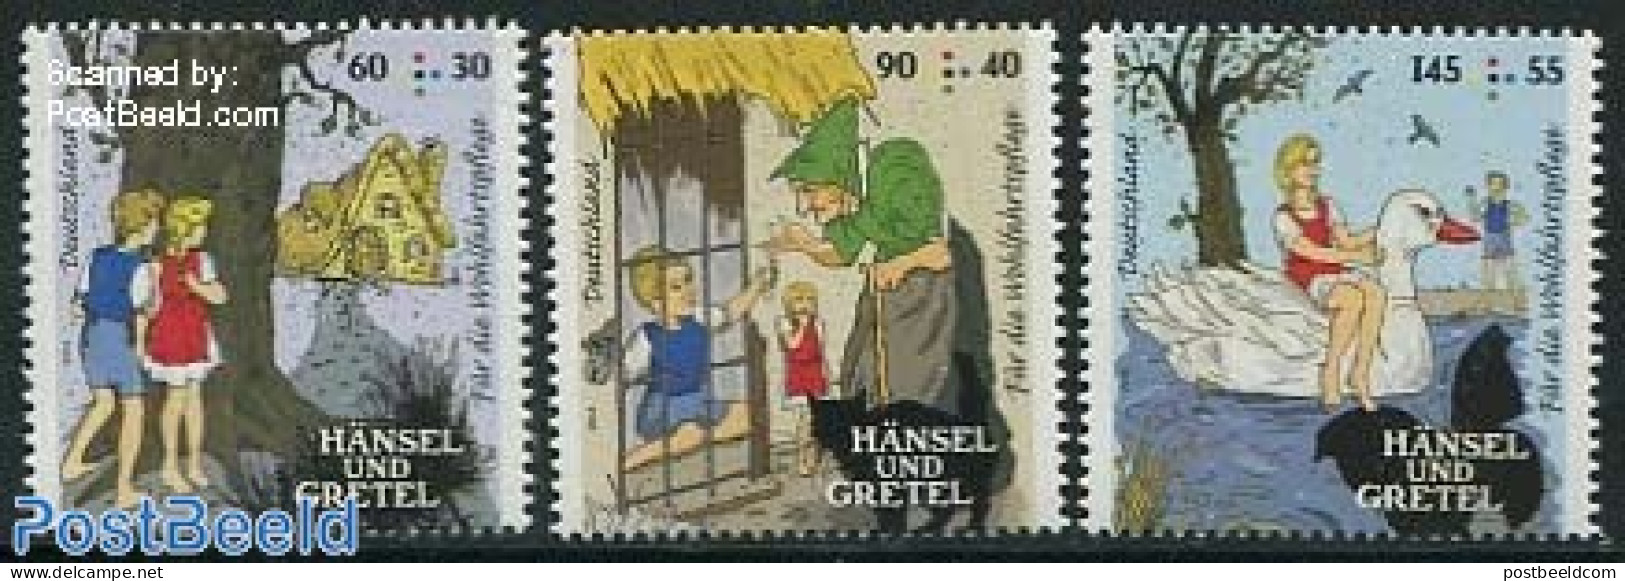 Germany, Federal Republic 2014 Welfare, Hansel And Gretel 3v, Mint NH, Art - Fairytales - Nuovi